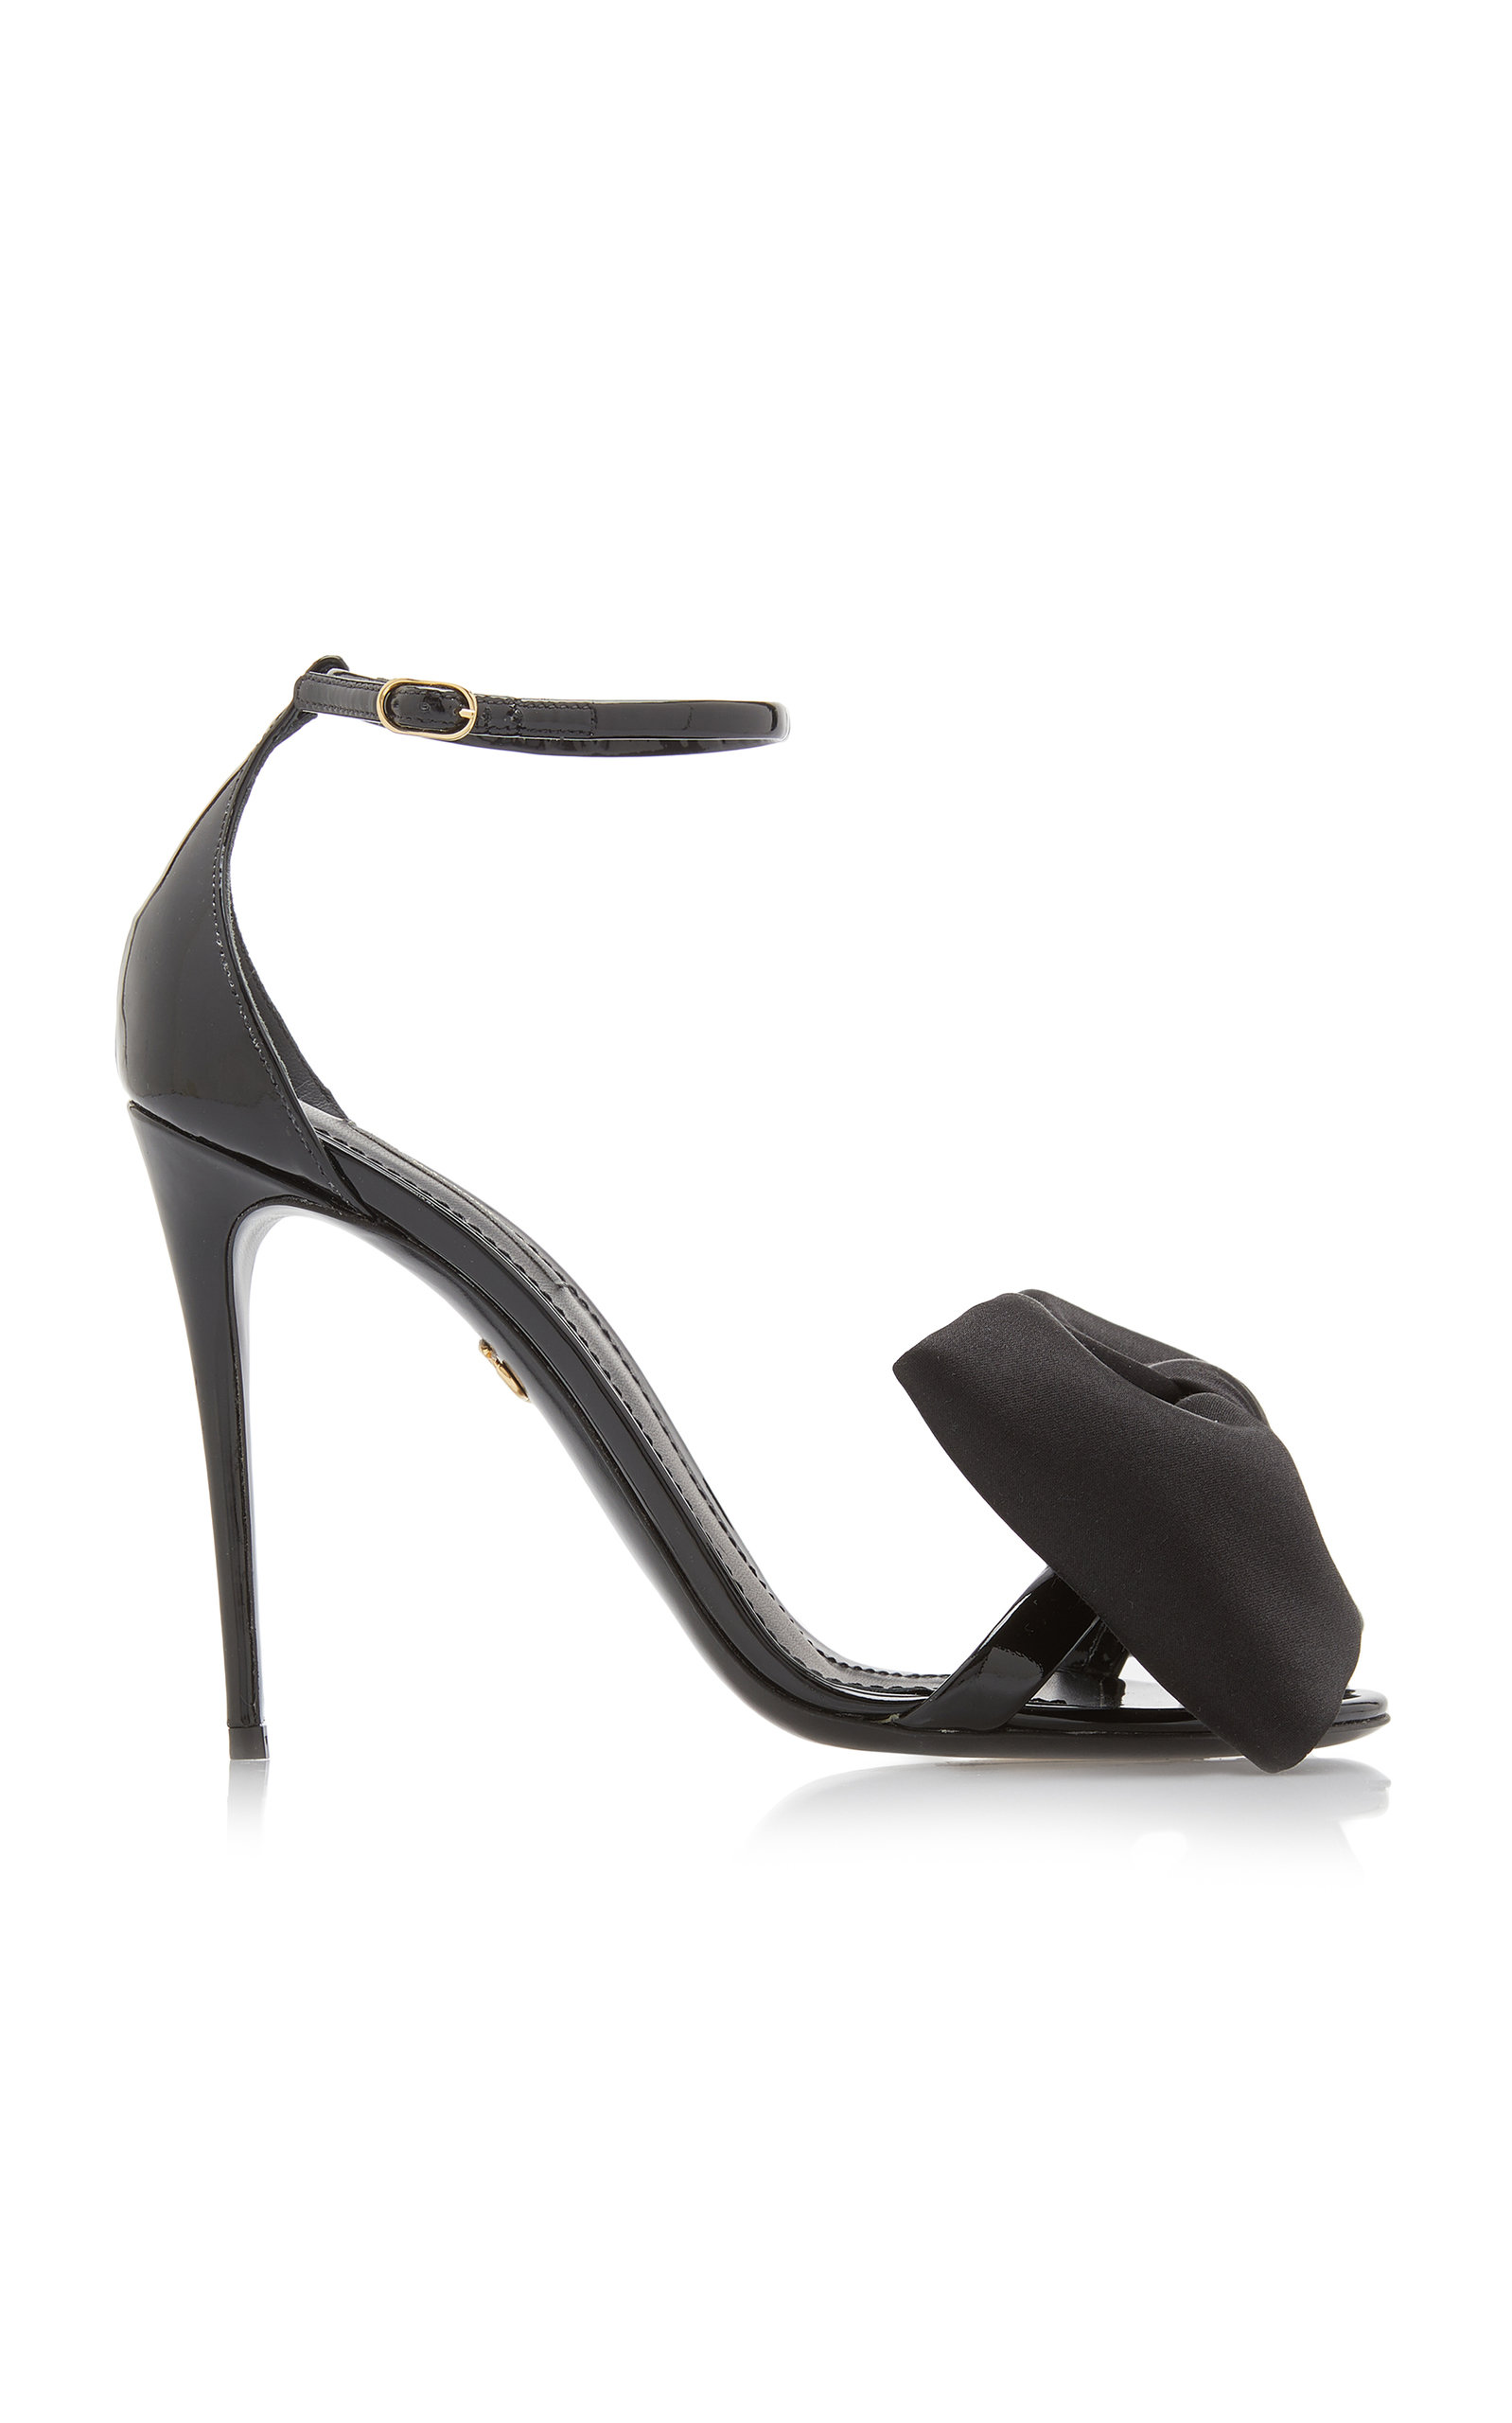 Dolce & Gabbana - Women's Bow-Embellished Patent Leather Sandals - Black - IT 36 - Moda Operandi